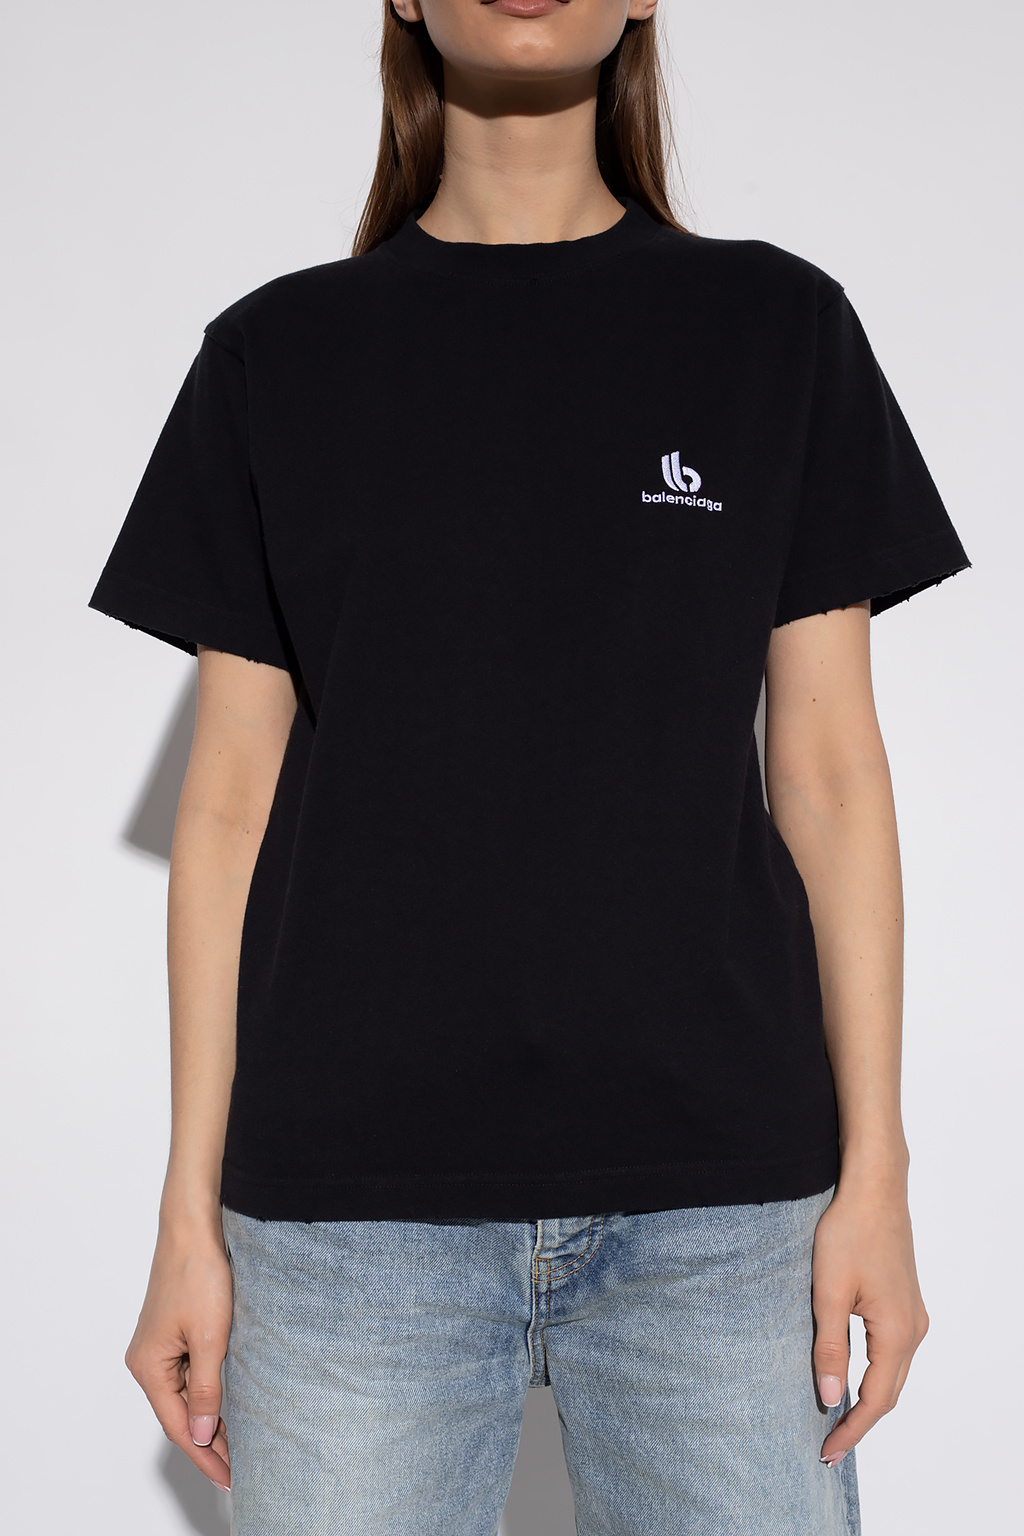 Balenciaga T-shirt with logo | Women's Clothing | Vitkac